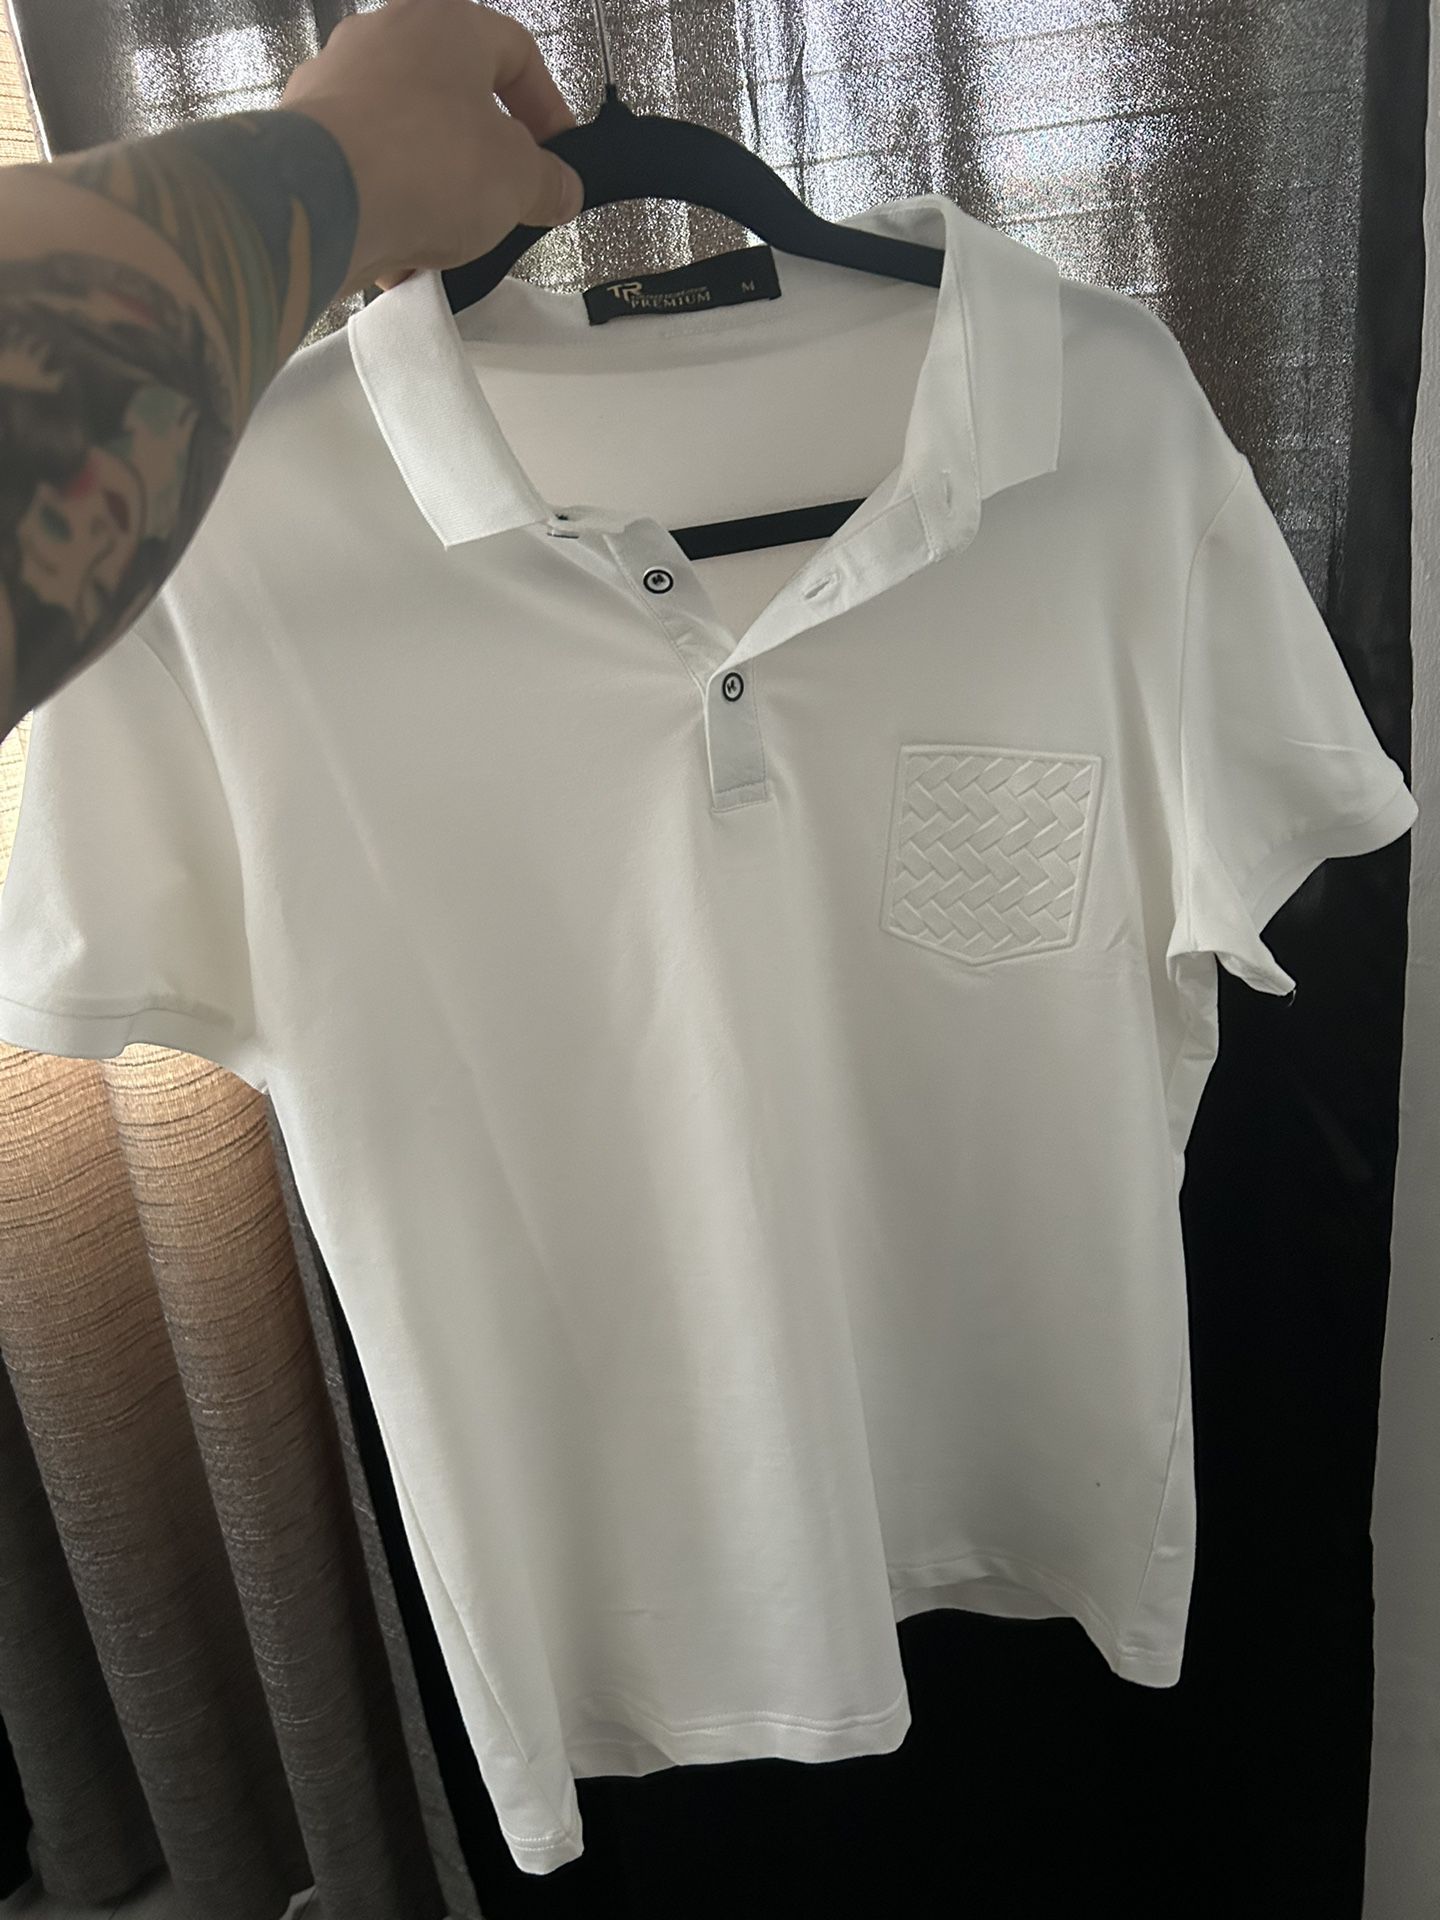 White T Shirt Medium Size 